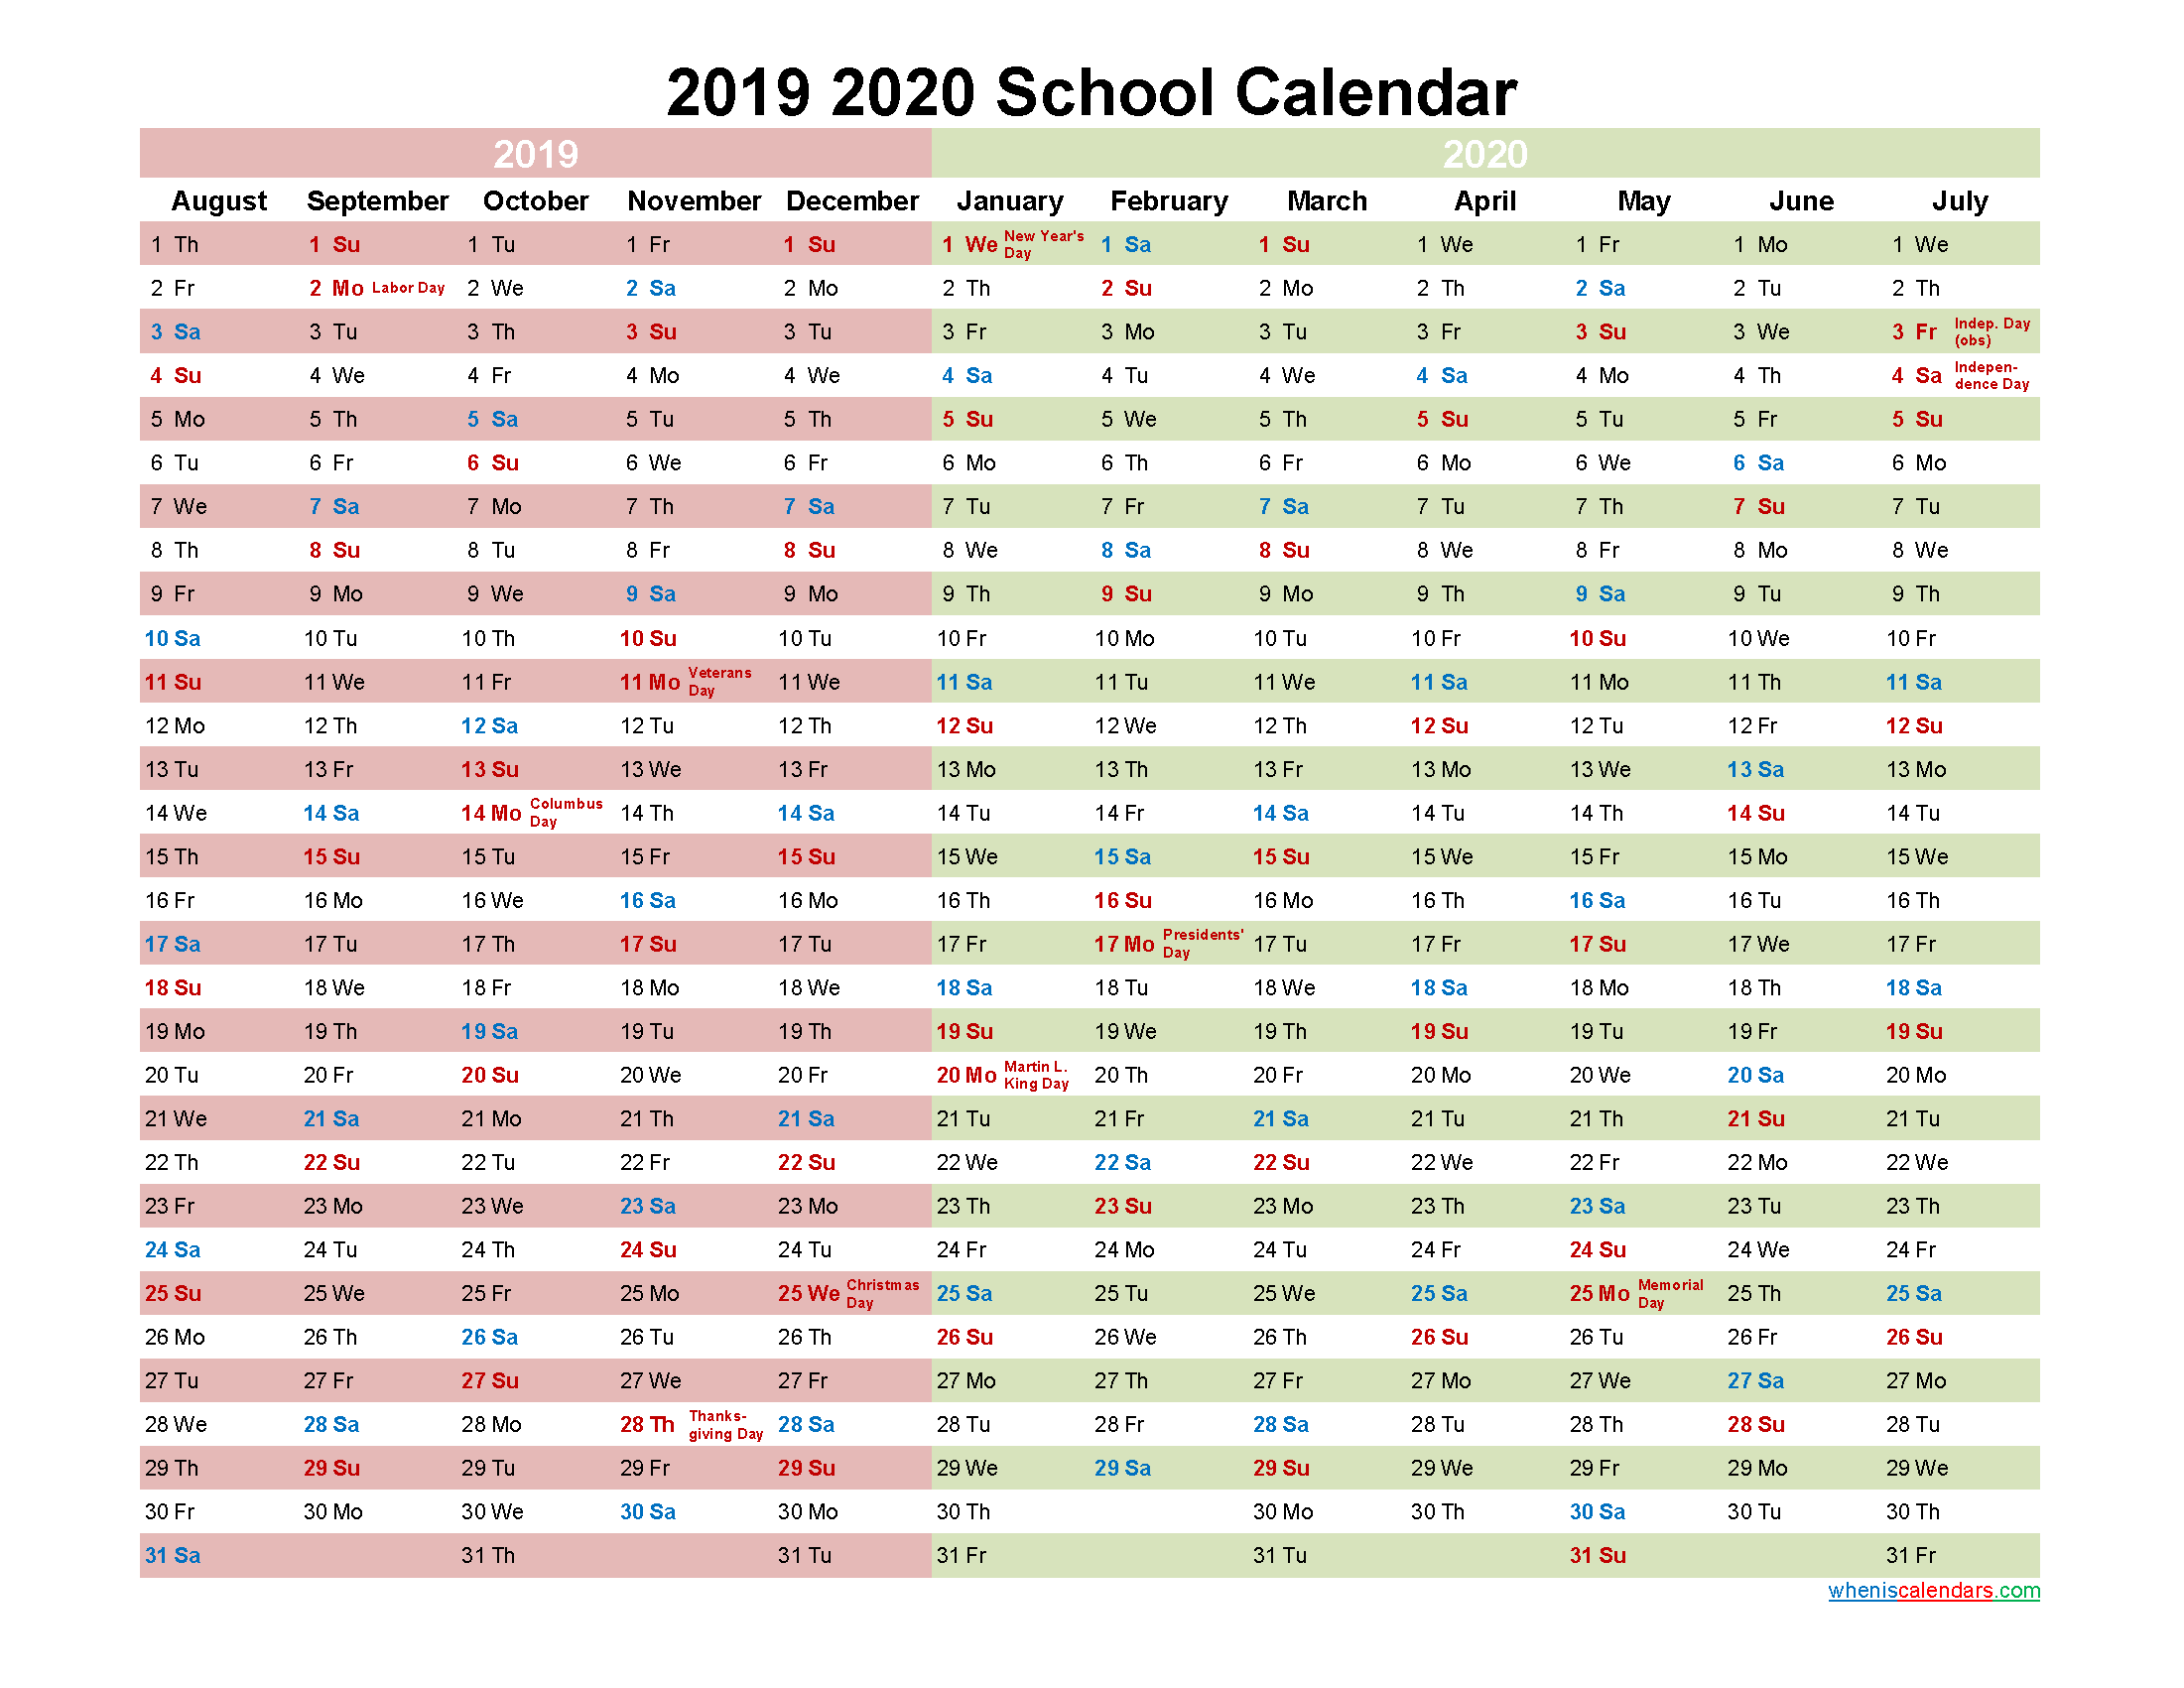 2019 and 2020 School Calendar Printable - Template No.20scl62